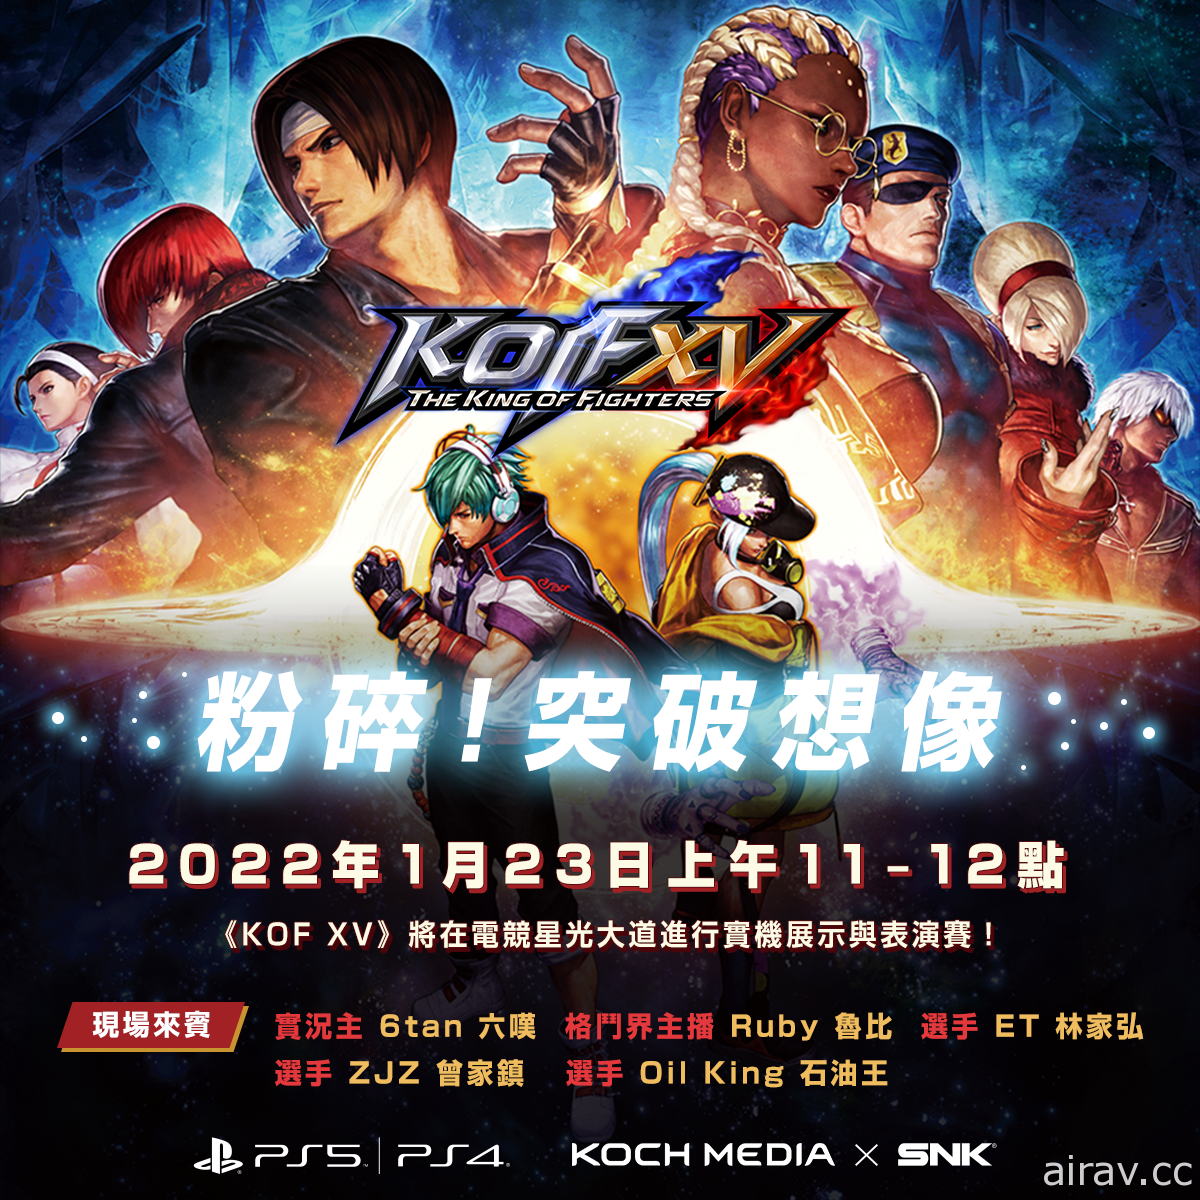 【TpGS 22】《拳皇 XV》預定 1/23 舉辦電玩展表演賽 邀請 ET、ZJZ、石油王等好手與會